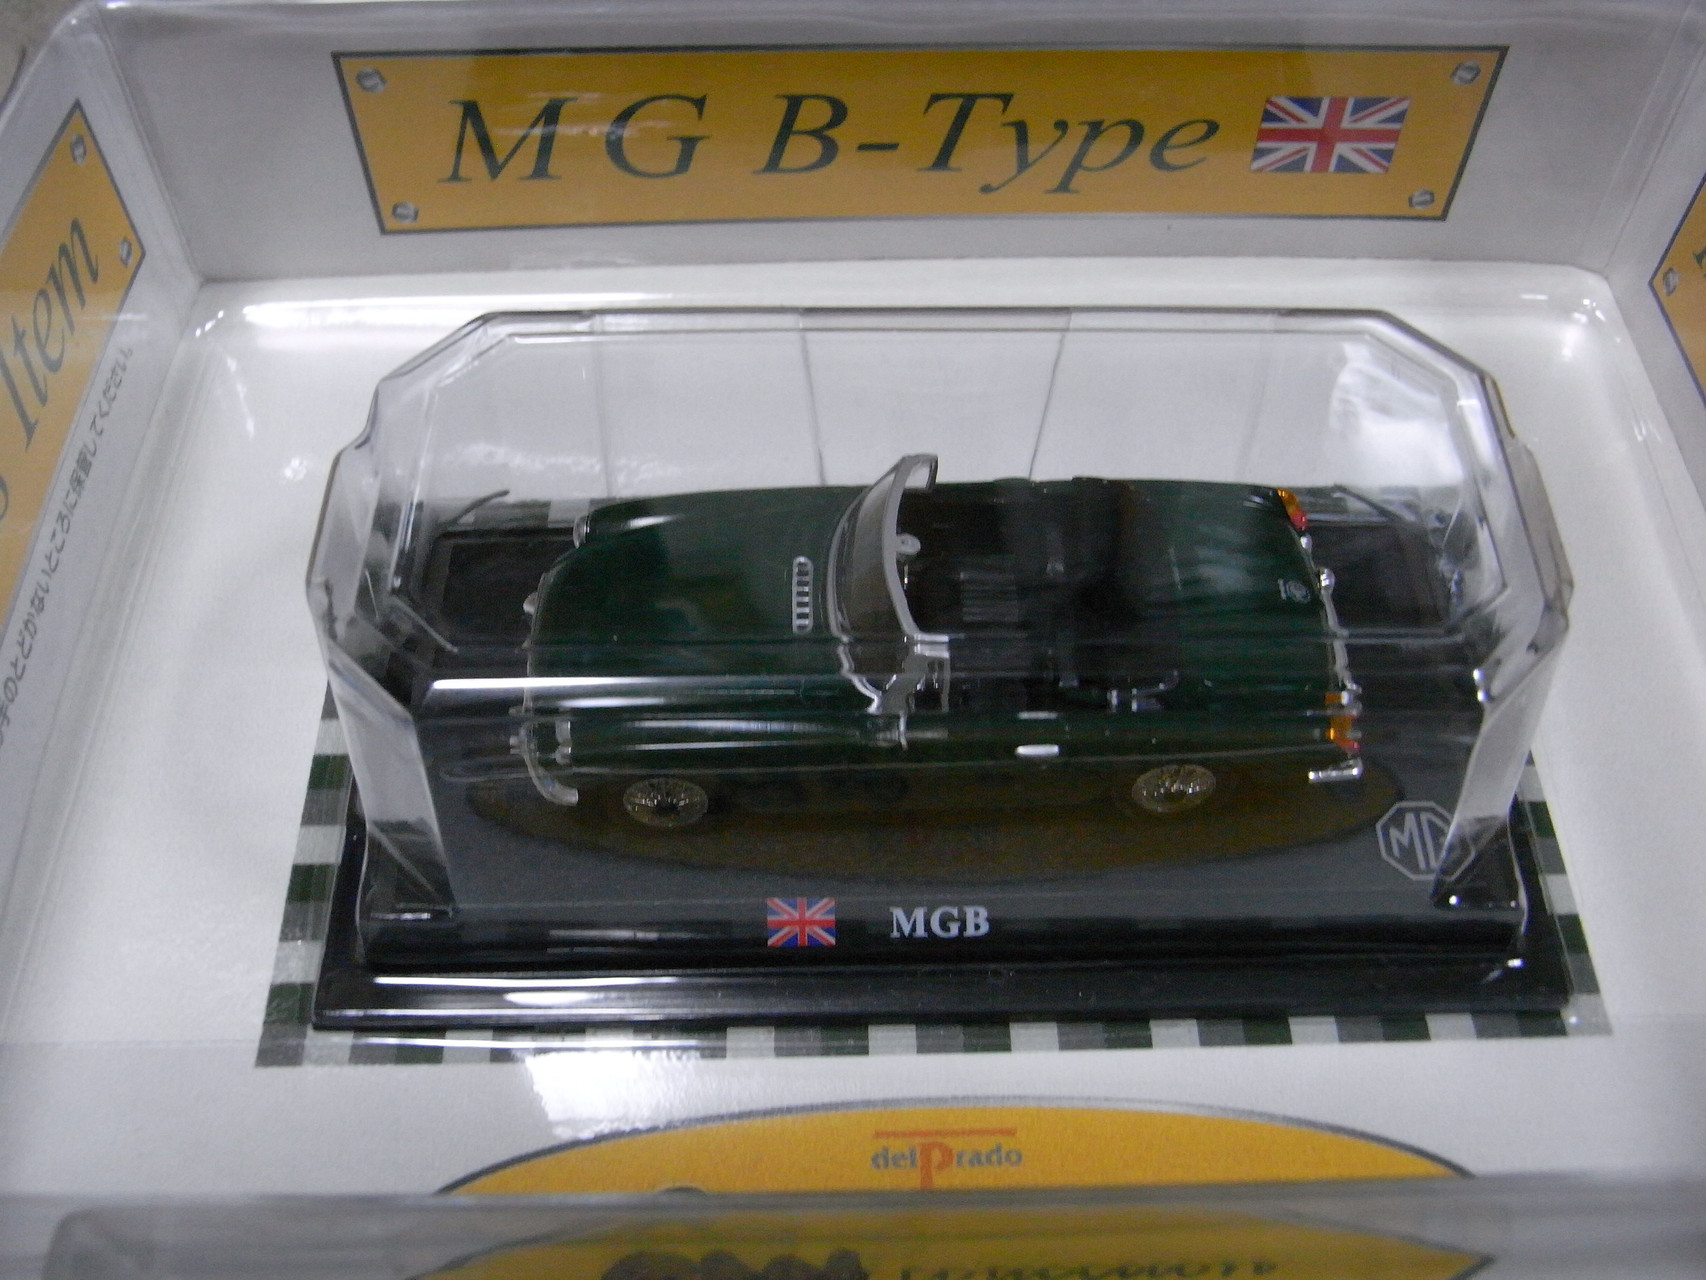 MG B-Type